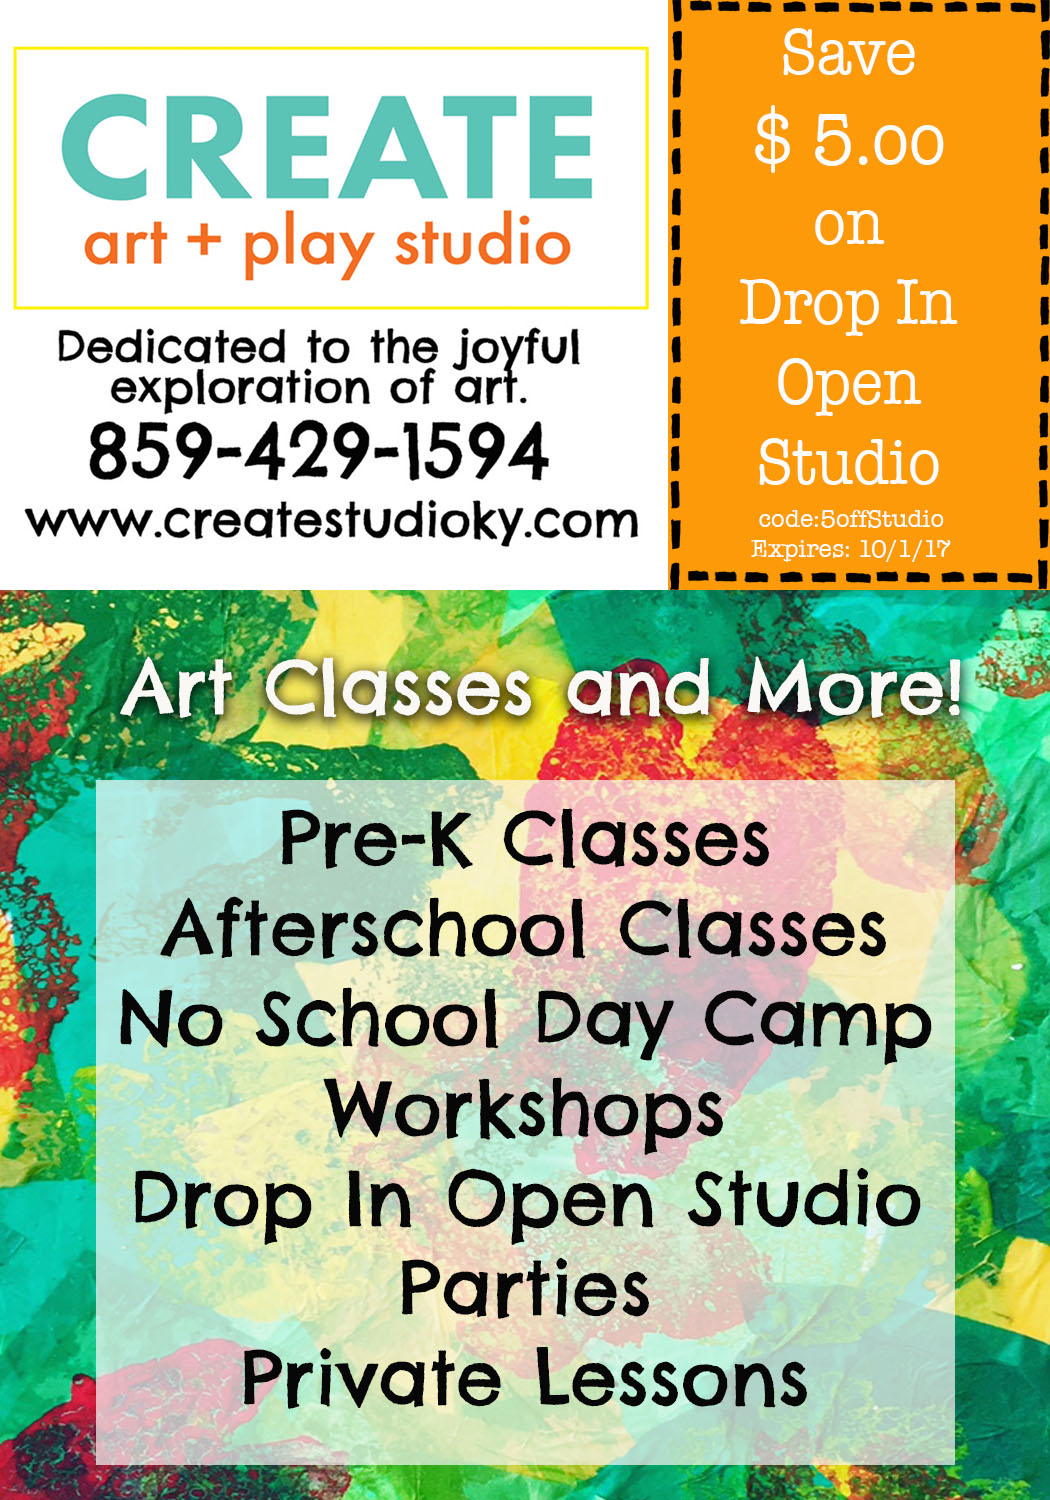 Explore Your Artistic Side at CREATE Art + Play Studio | Lexington Family